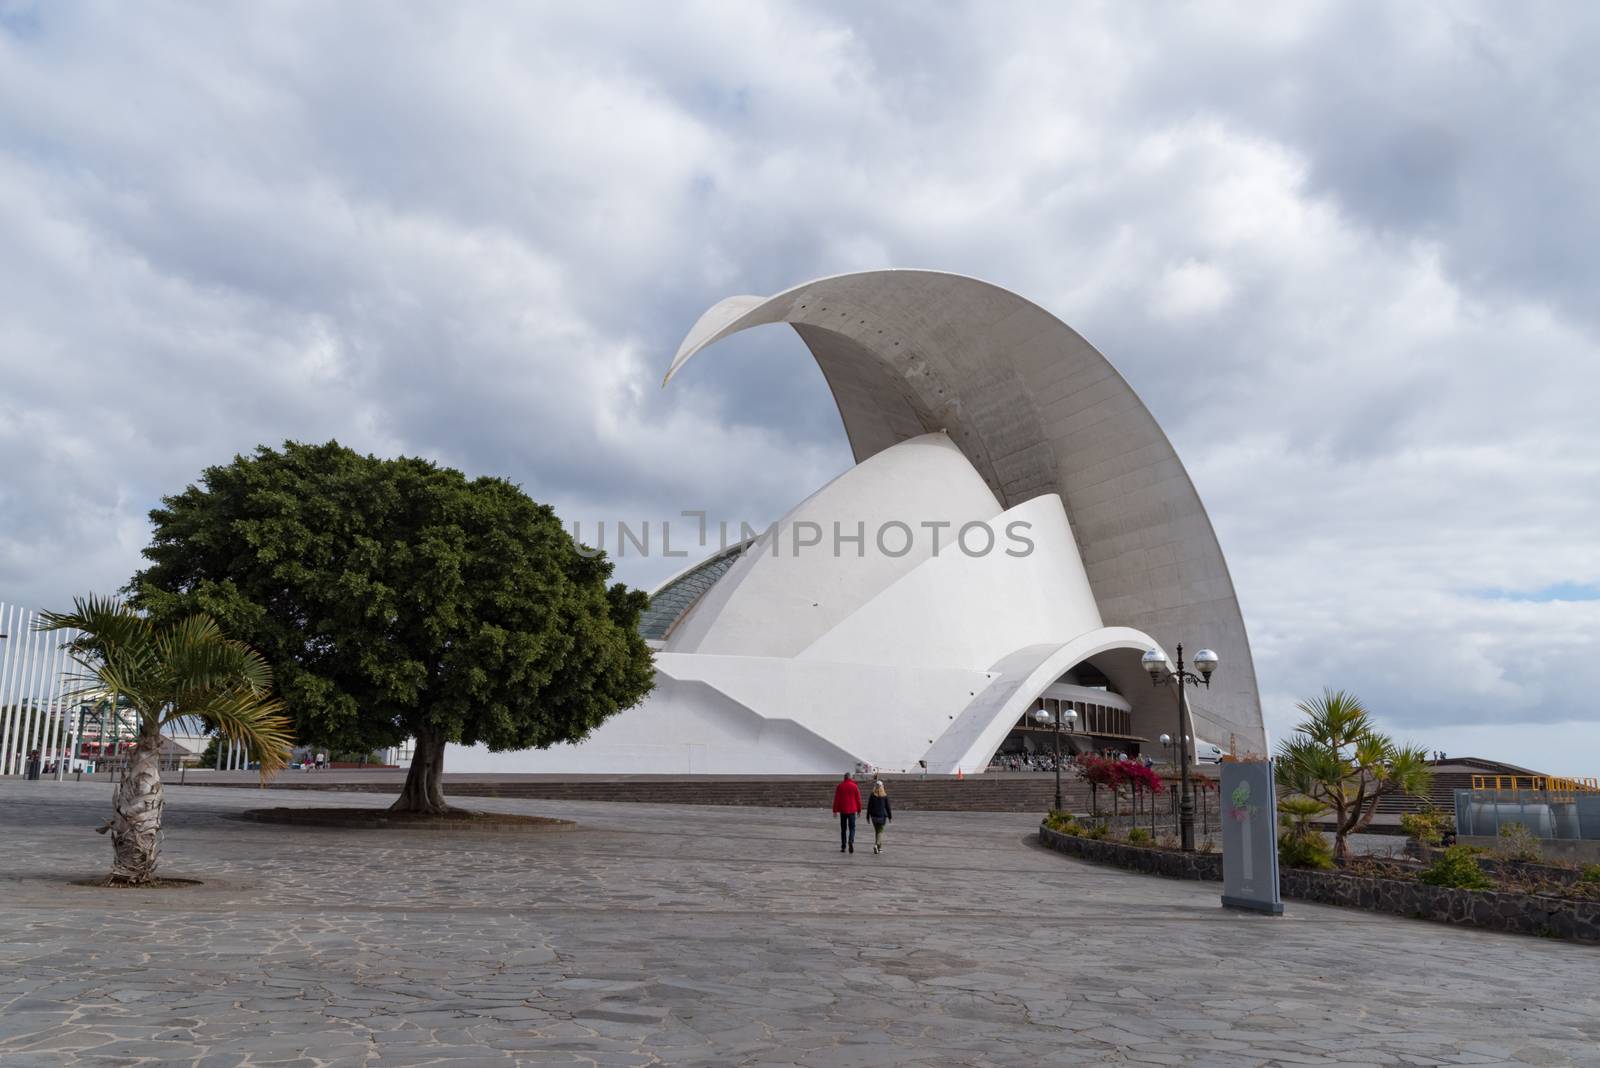 Santa Cruz de Tenerife, Spain -January 9, 2020: Auditorio de Tenerife. This auditorium was designed by famous architect Santiago Calatrava